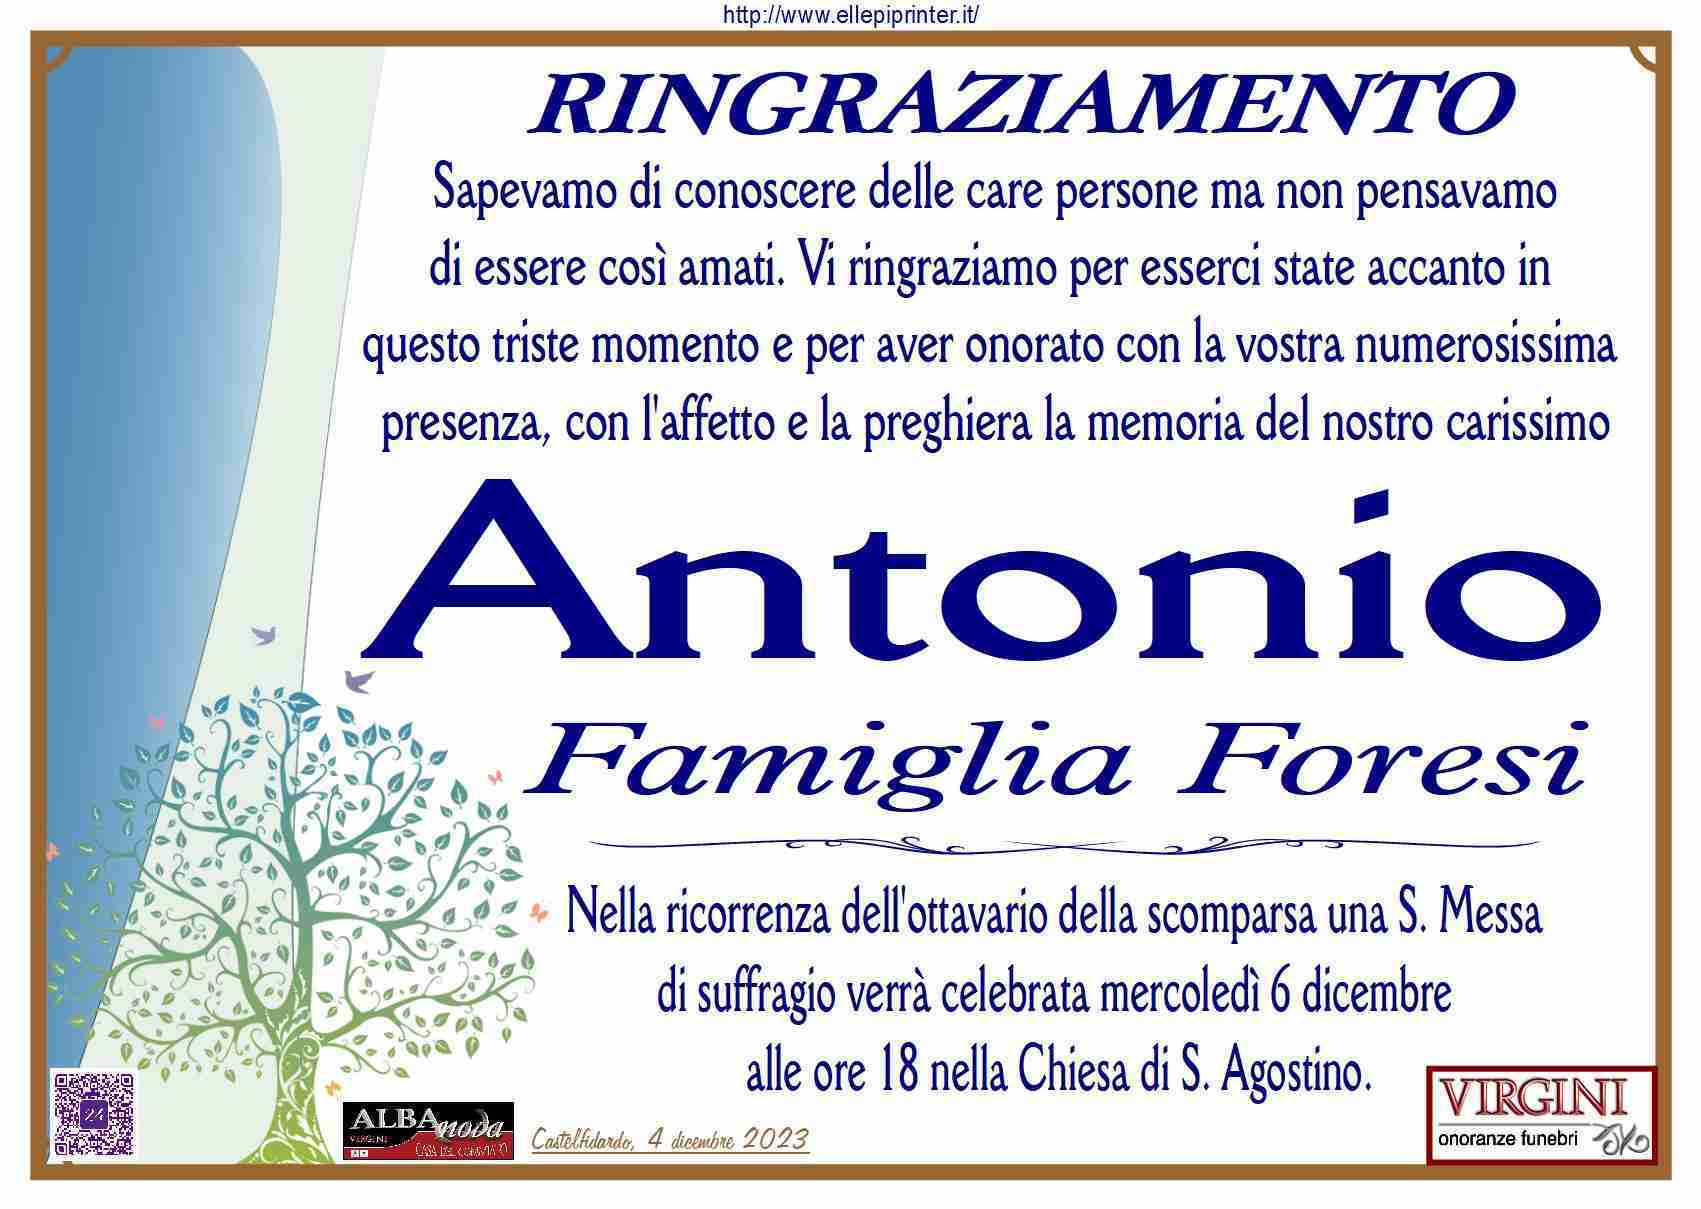 Antonio Foresi